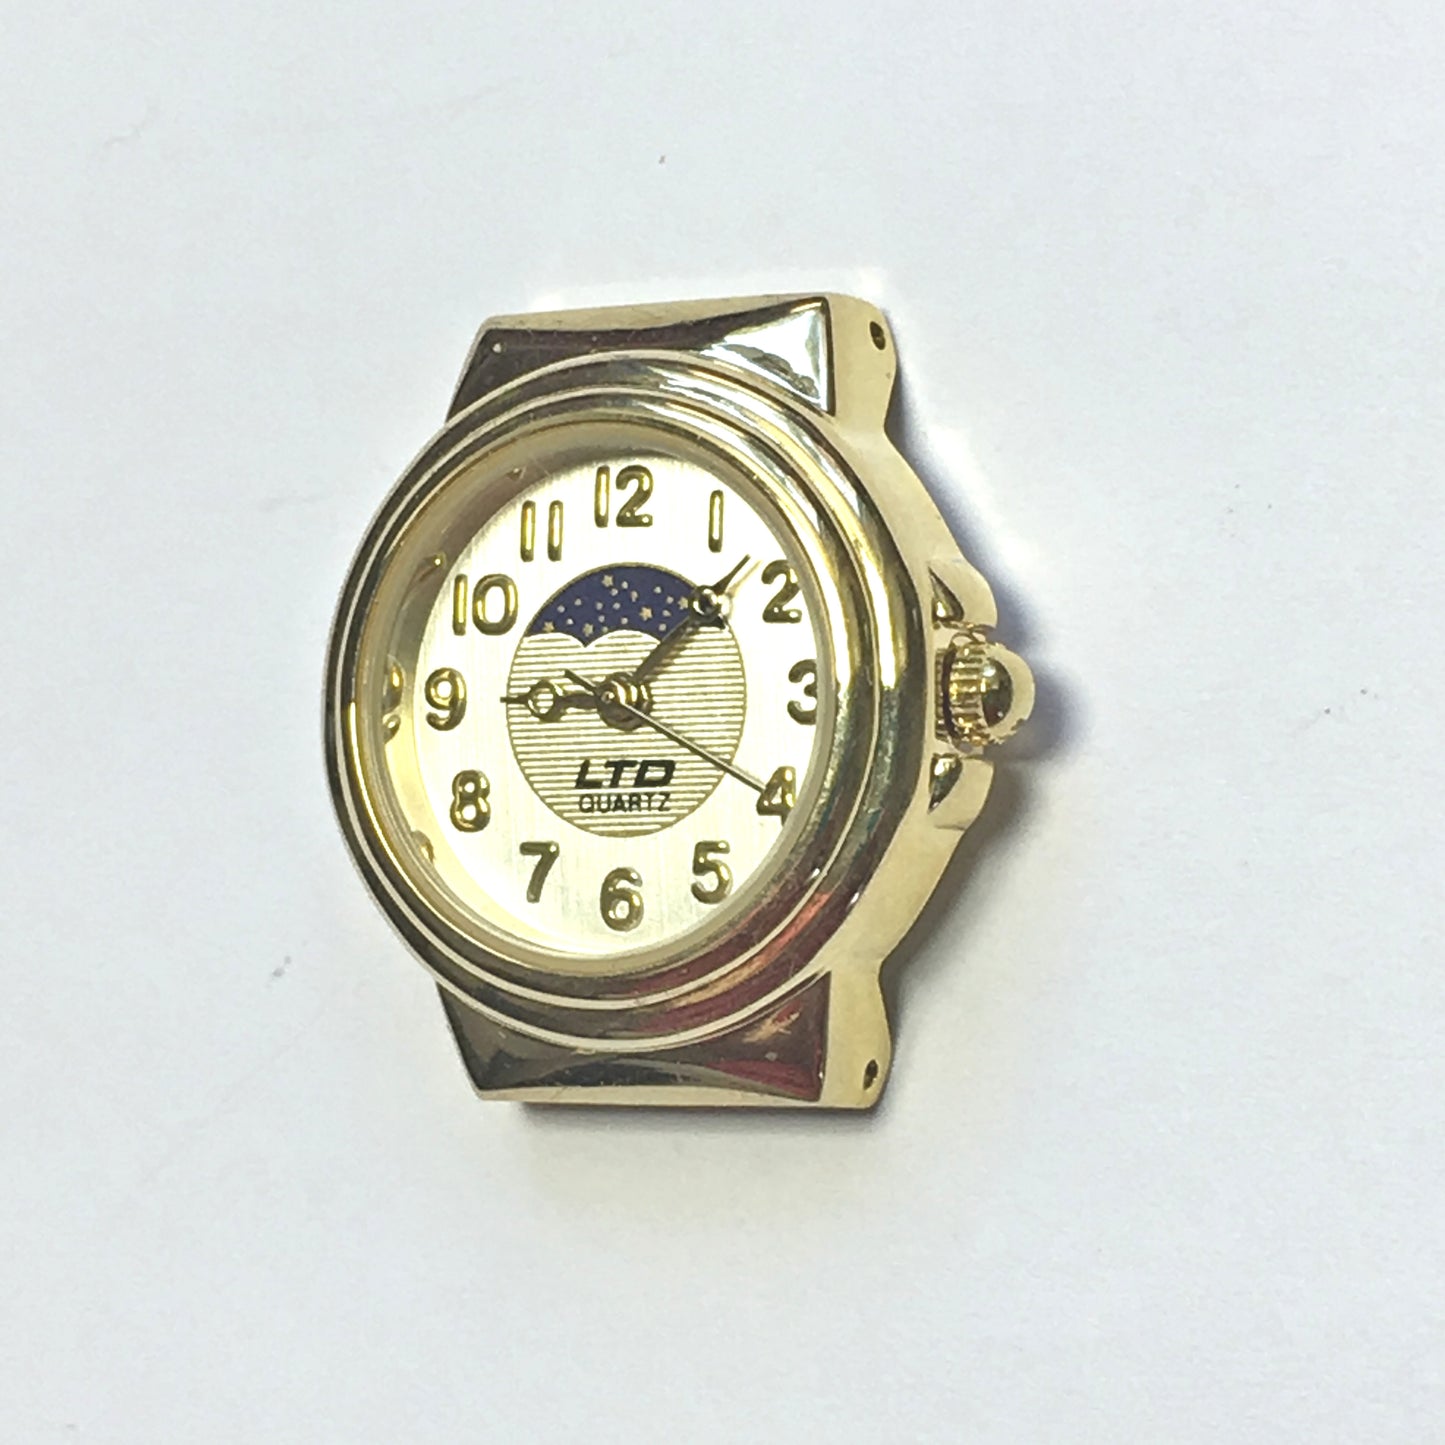 Gold LTD Quartz Sun/Moon Watch Face with Pins, 29 x 27 mm, New, No Scratches